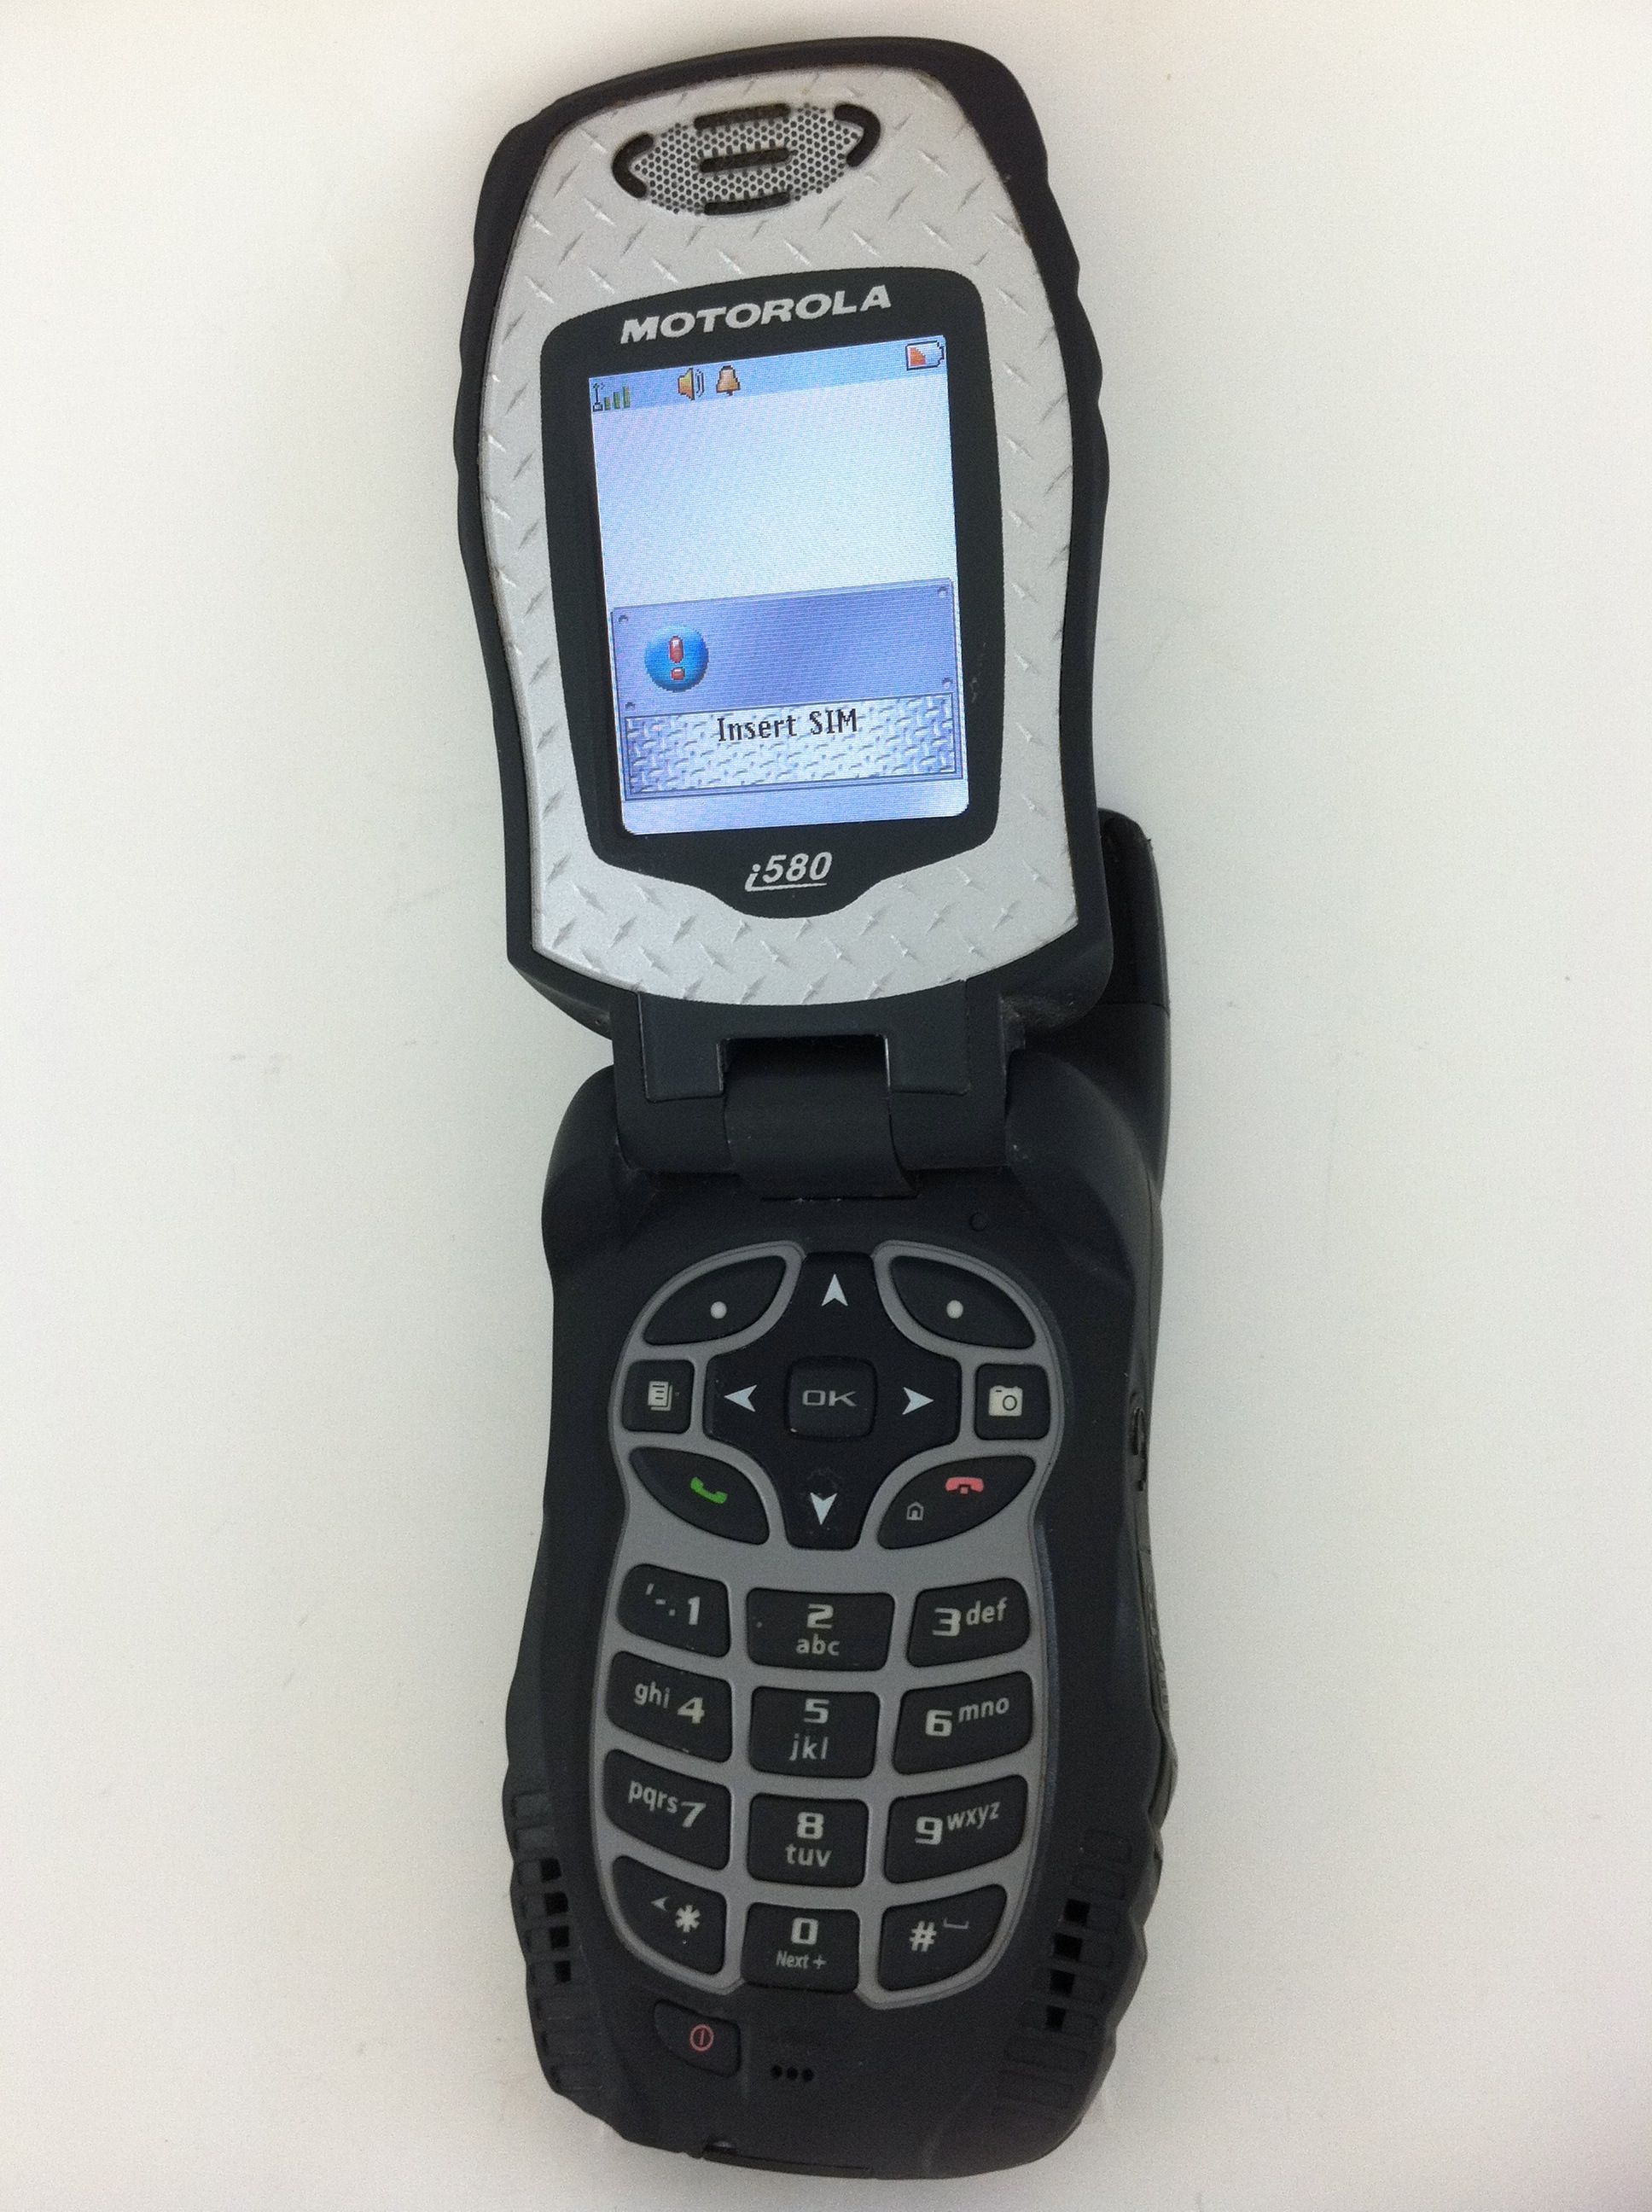 Motorola i580 Nextel Rugged PTT Flip Phone w Bluetooth 1MP Camera